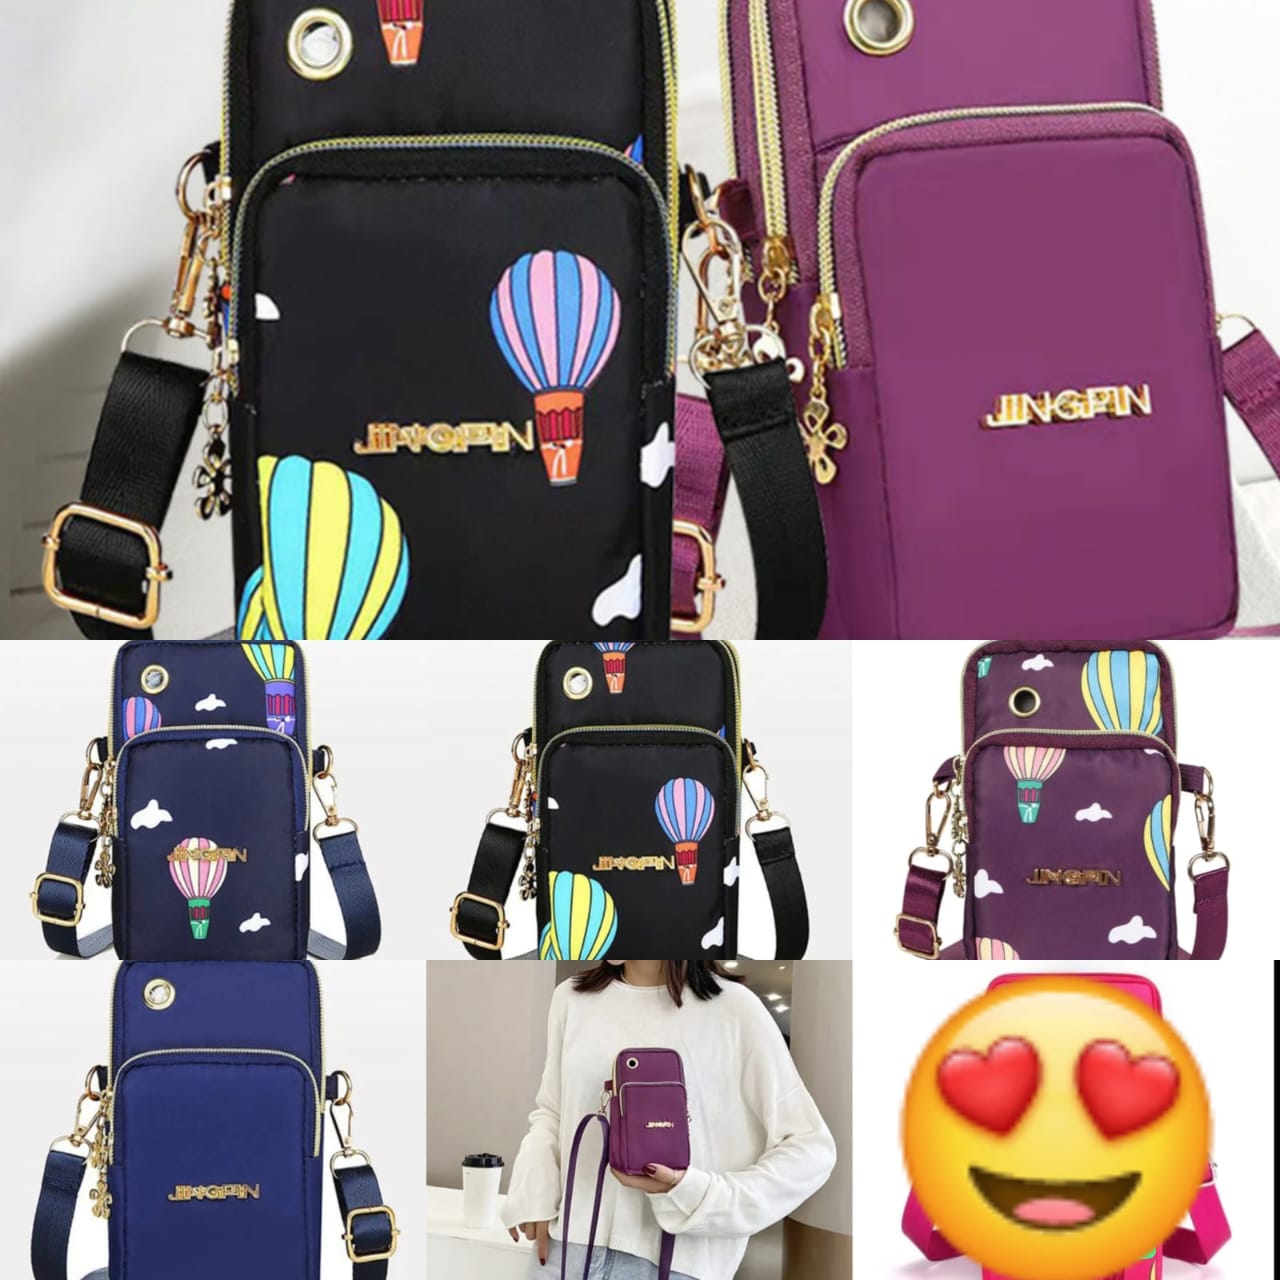 Beautiful 3 Zippers Crossbody Cellphone Bag